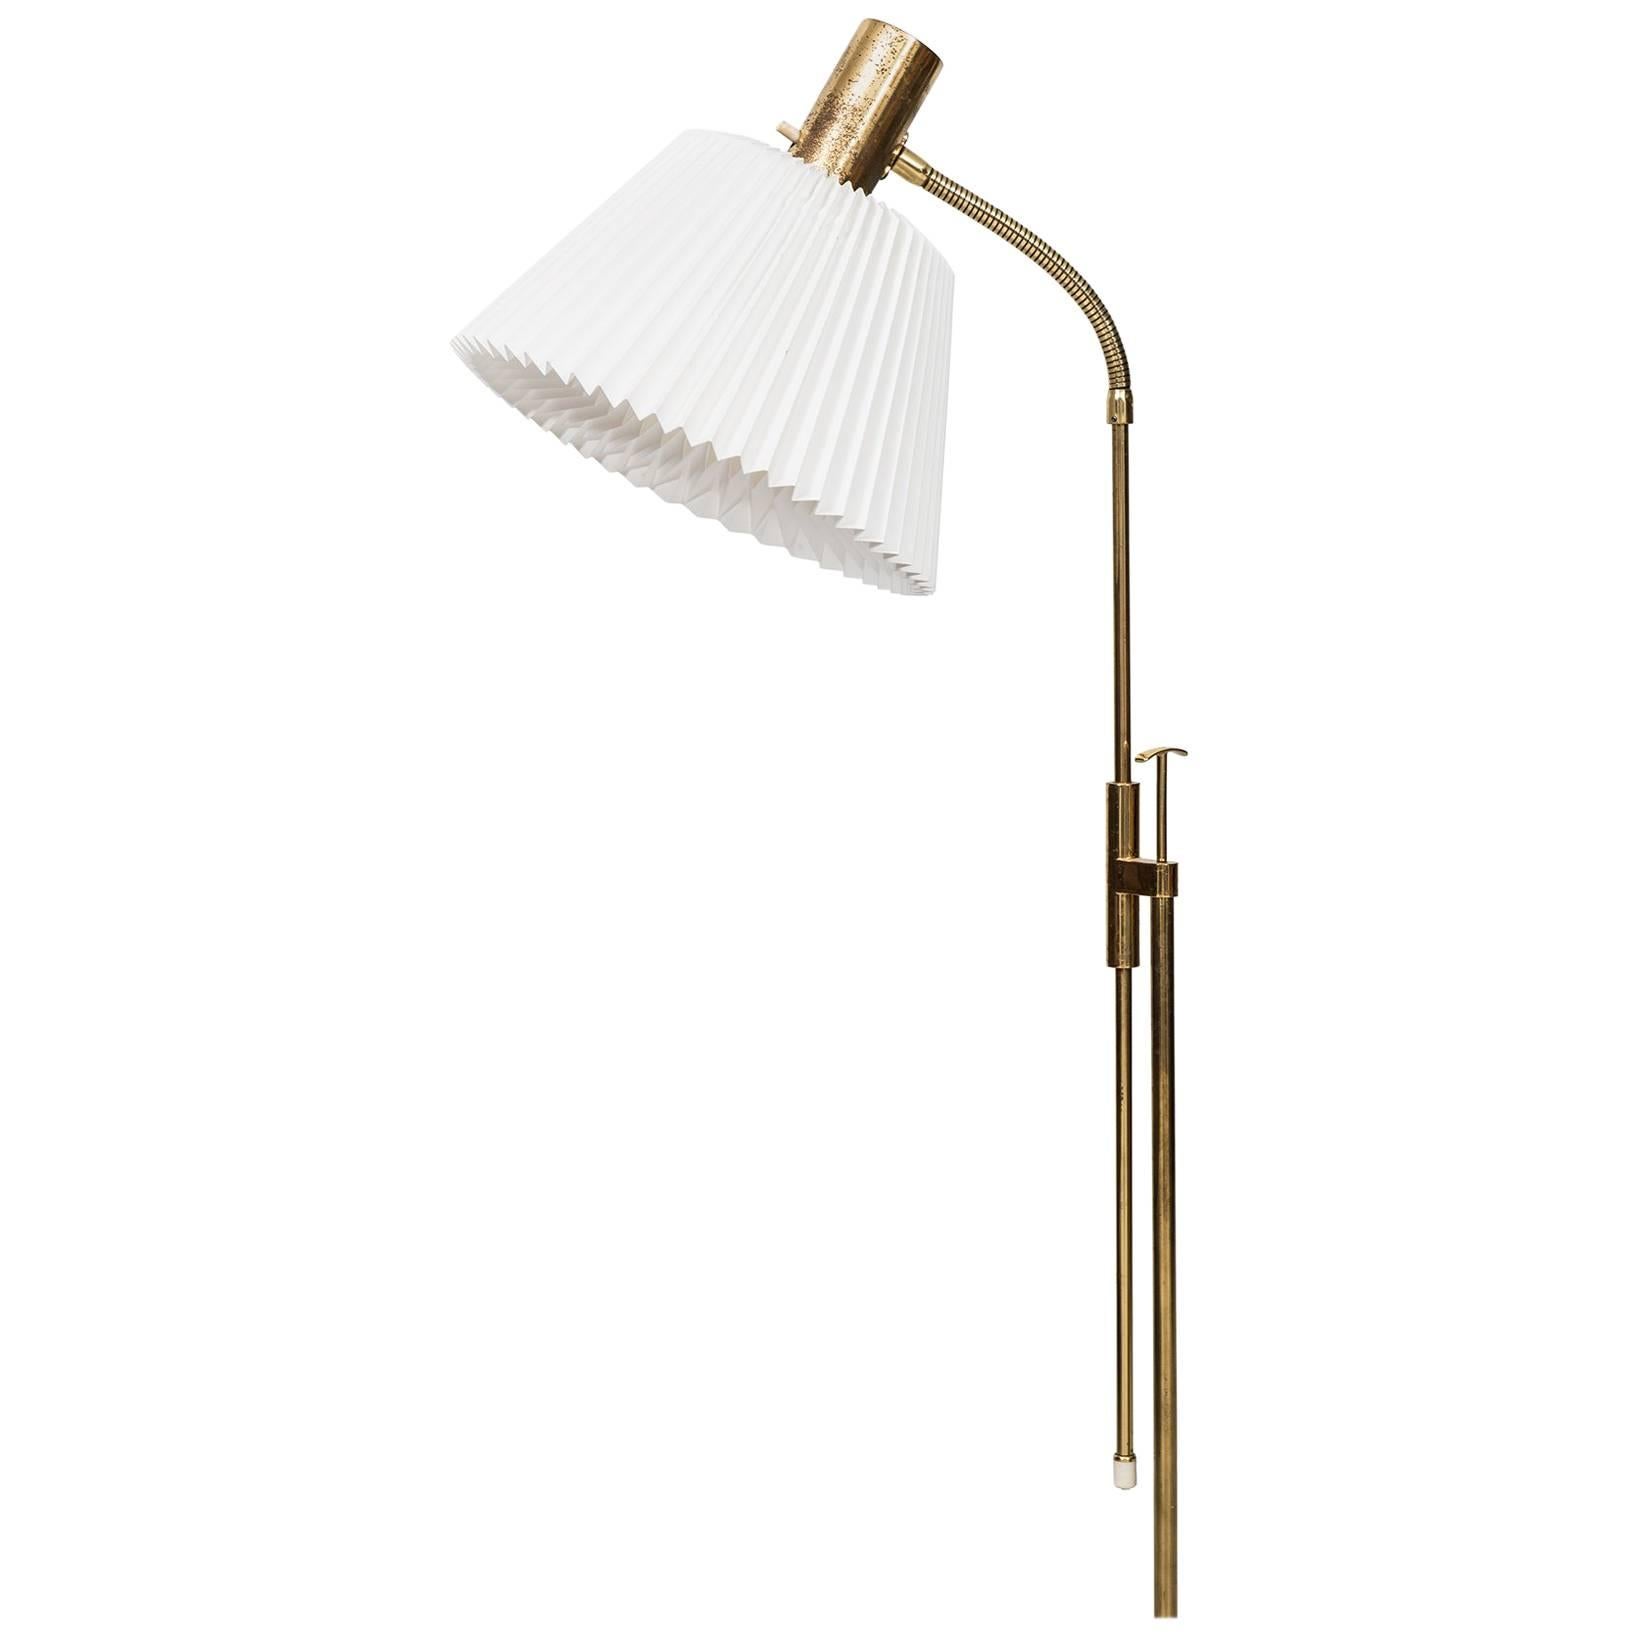 Height Adjustable Floor Lamp by Falkenbergs Belysning in Sweden